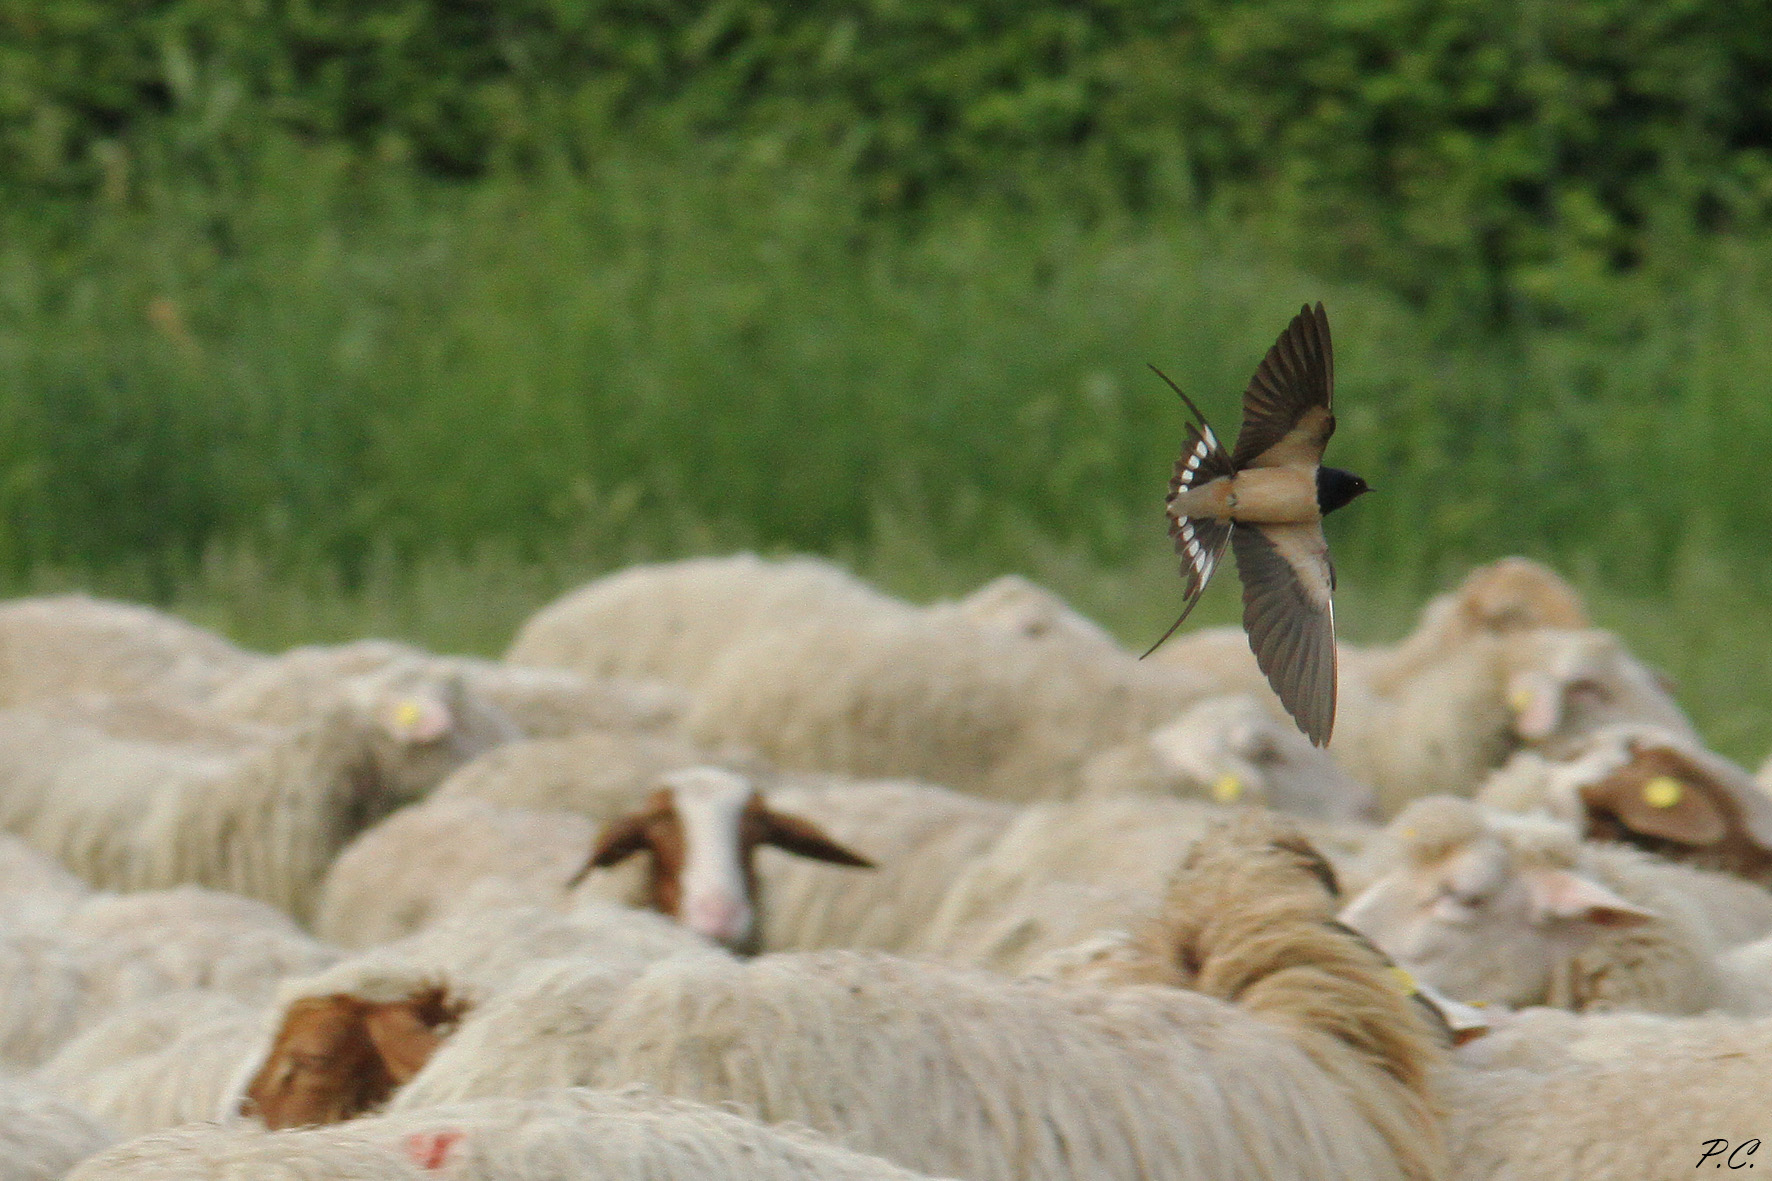 Garriti on the Flock...